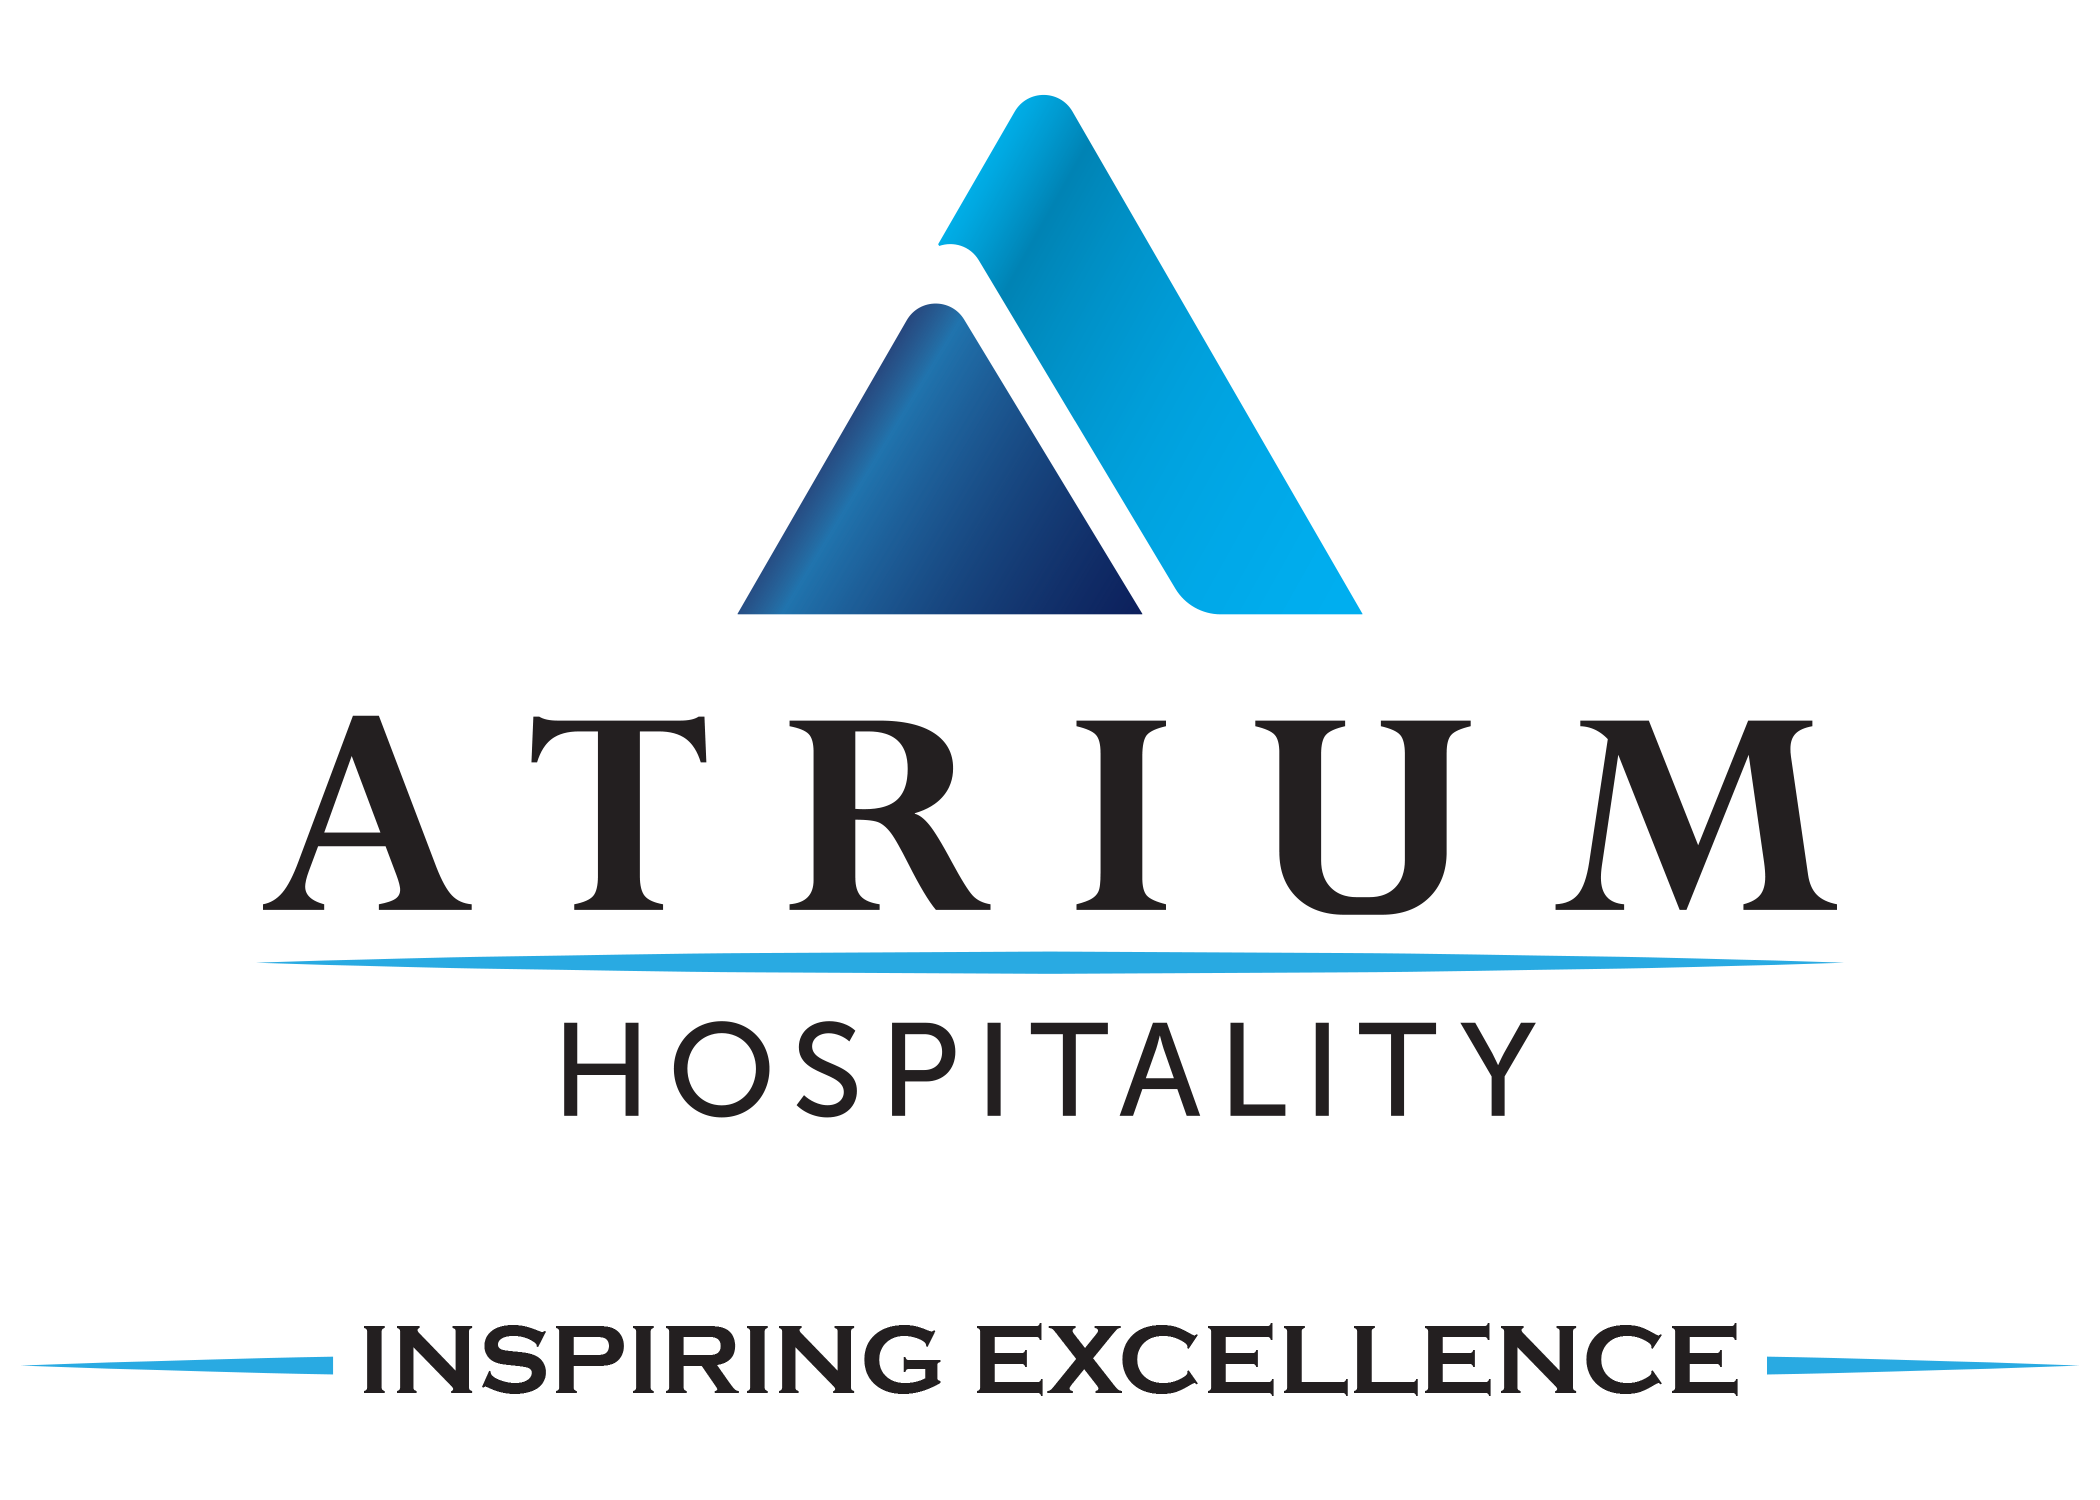 Top more than 72 atrium logo - ceg.edu.vn